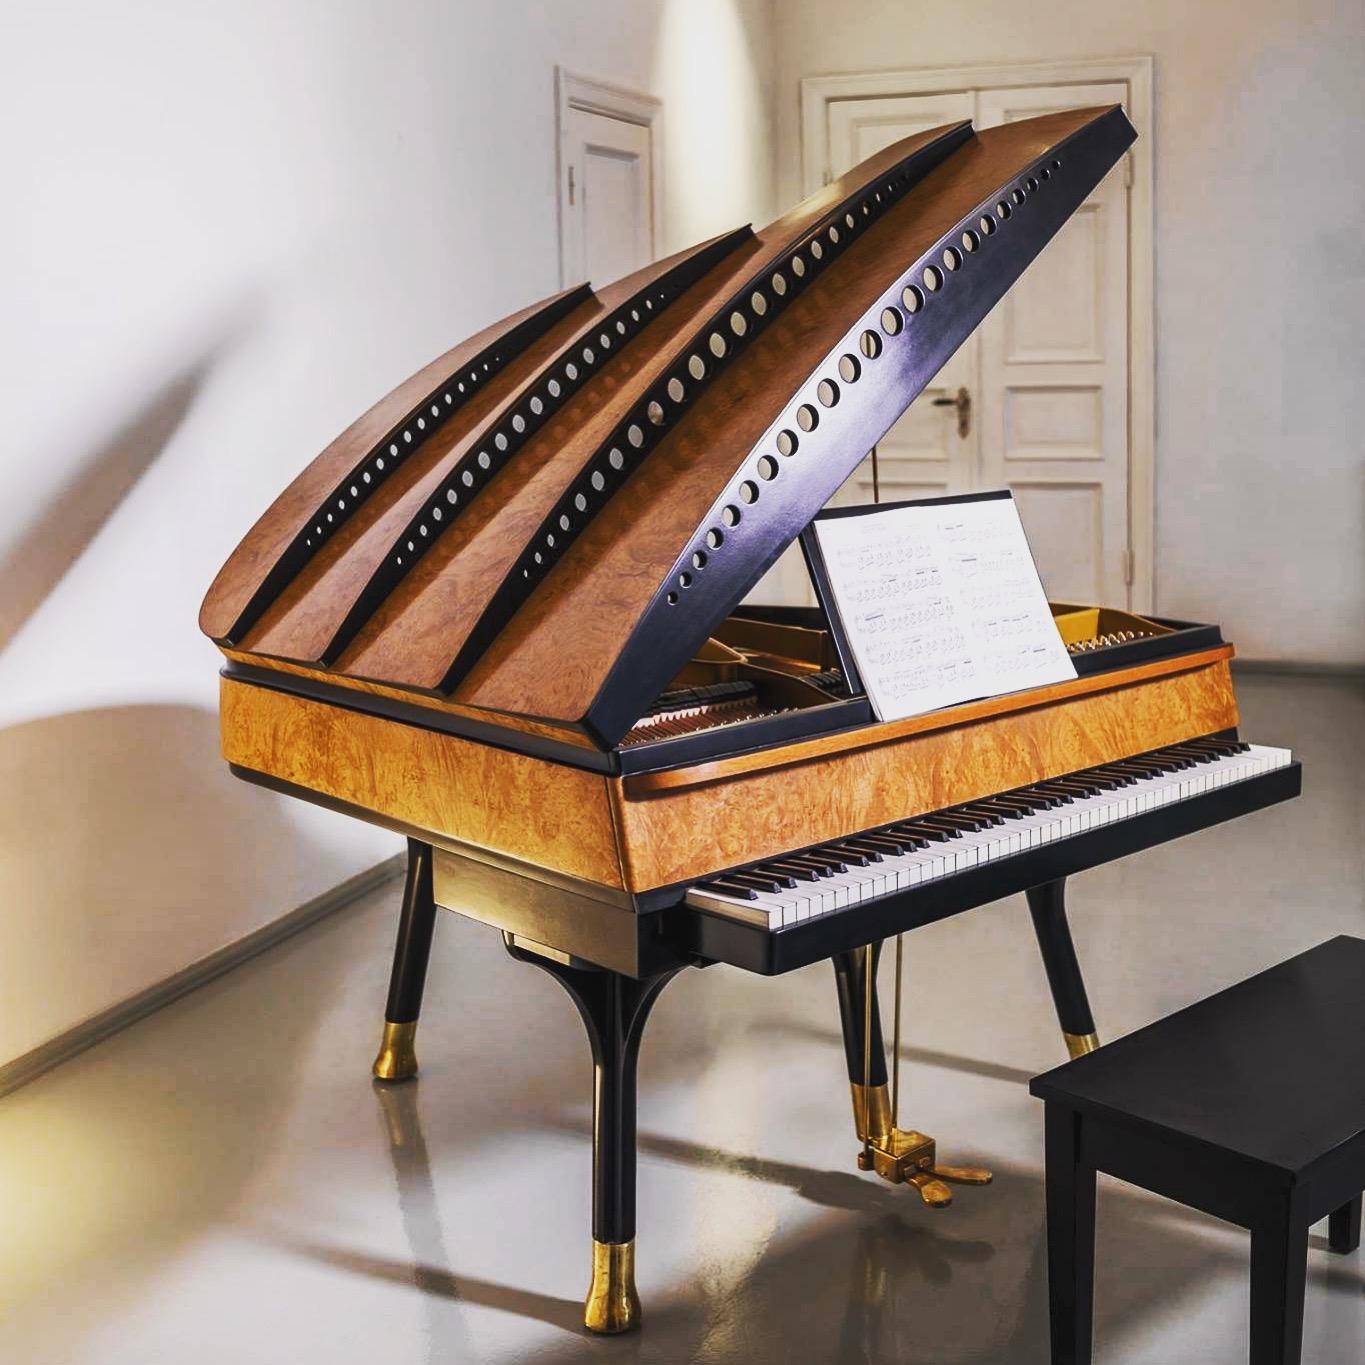 Danish PH Bow Grand Piano, Matte Chestnut Wood with Brass Details, Modern, Sculptural